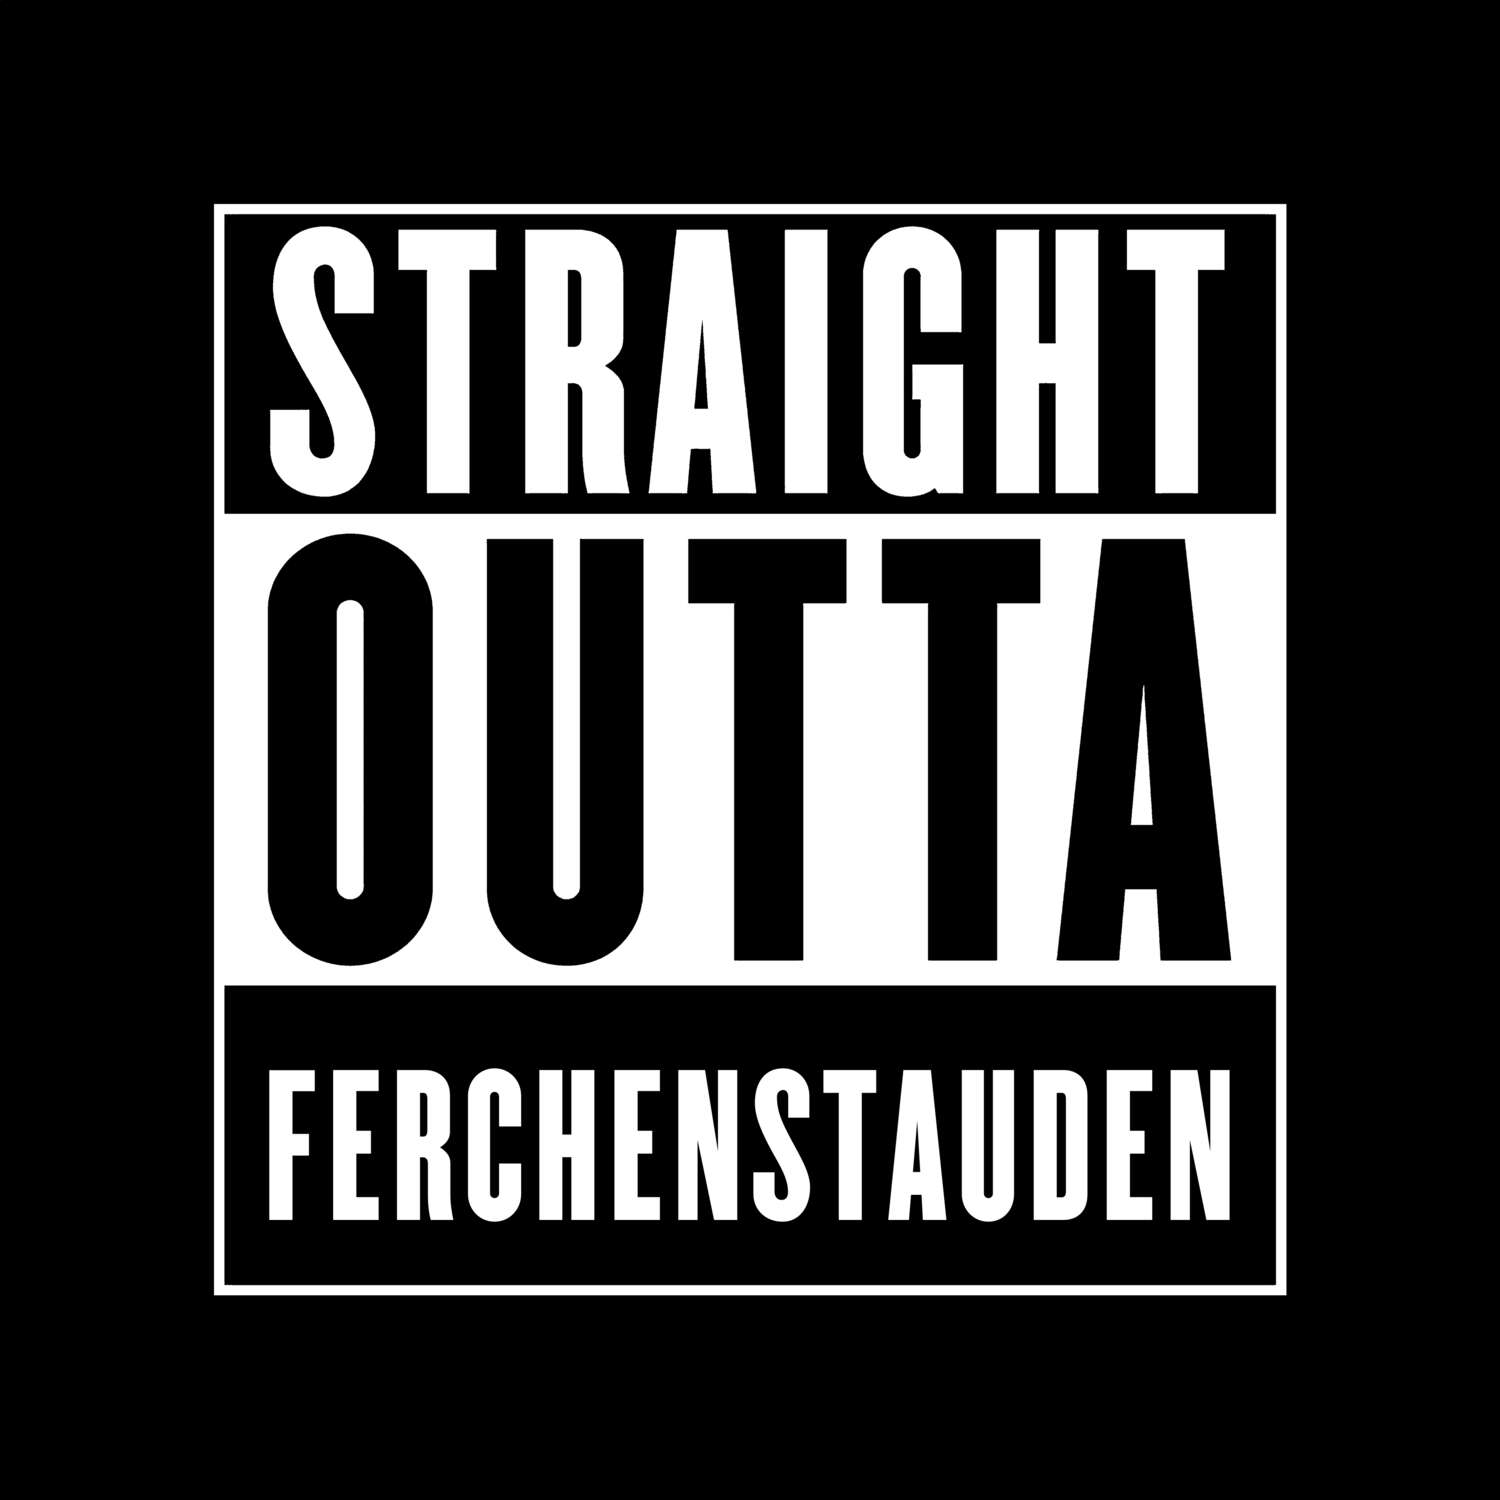 Ferchenstauden T-Shirt »Straight Outta«